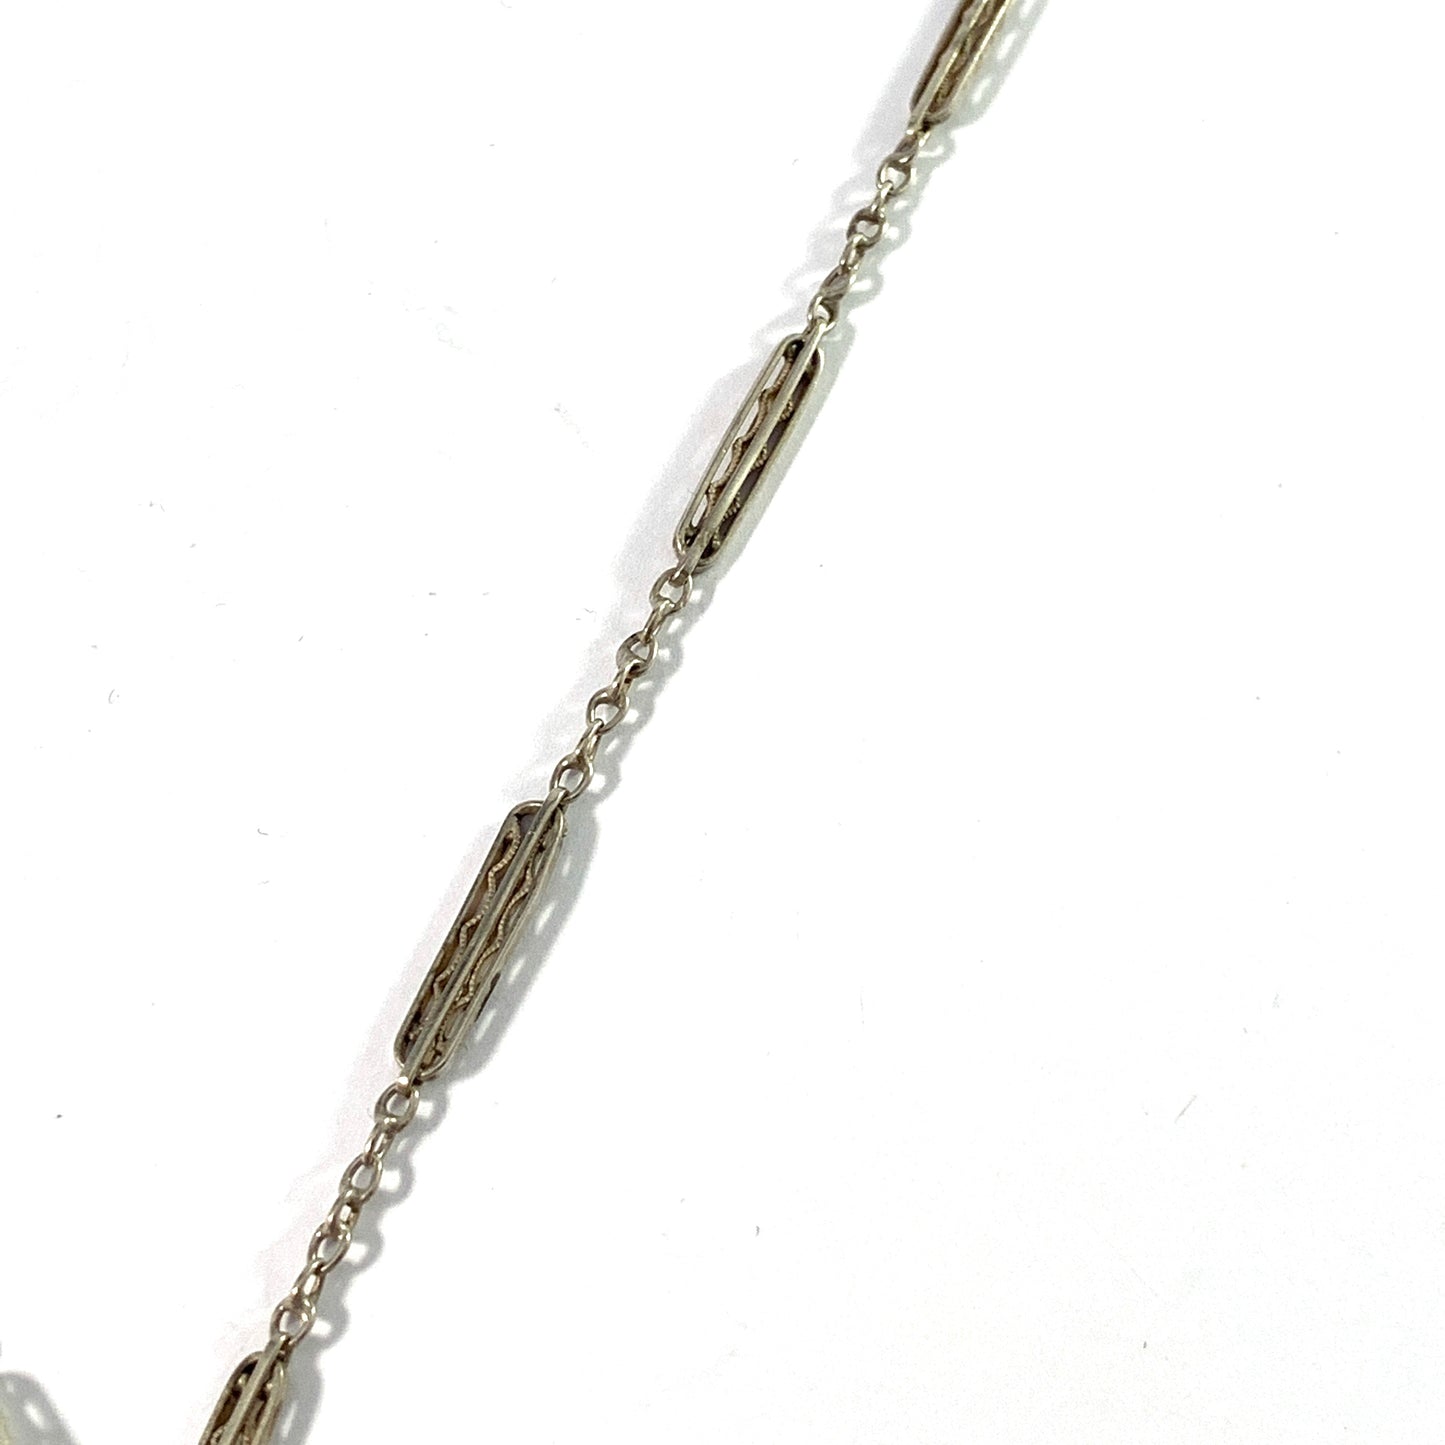 Maker EL, Germany c year 1900 Edwardian 800 Silver M o P Paste Stone Pendant Necklace.